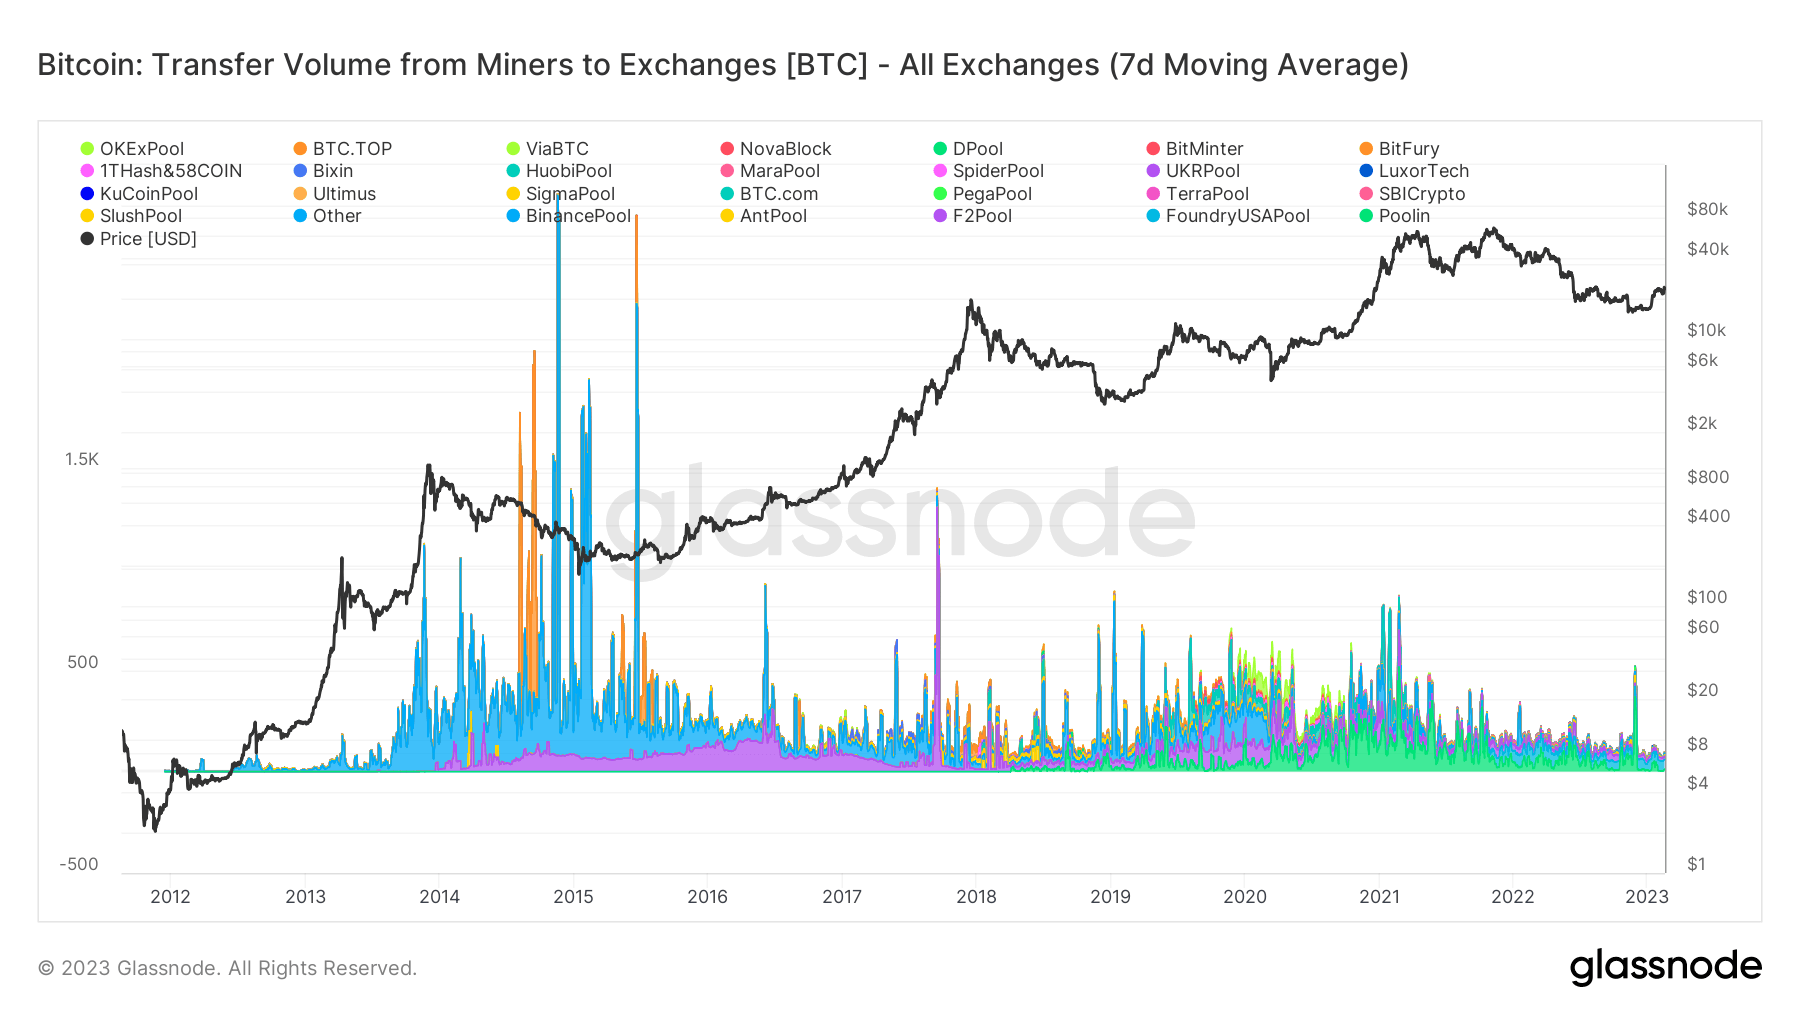 Bitcoin exchange volumes